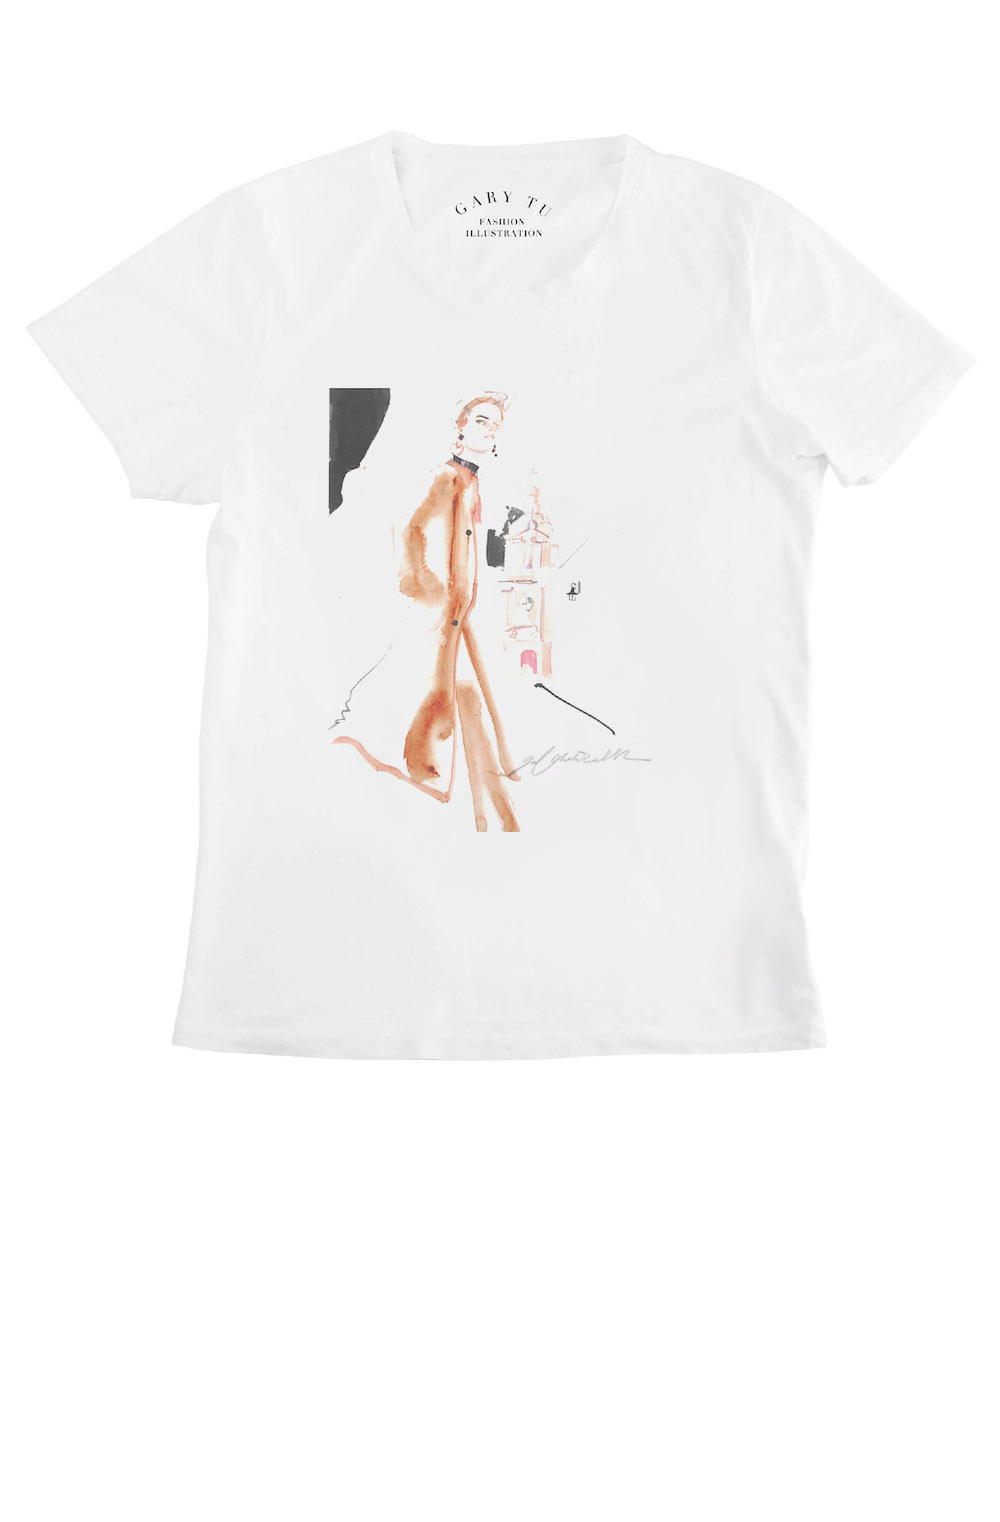 T-shirt Fashion ink 021-2